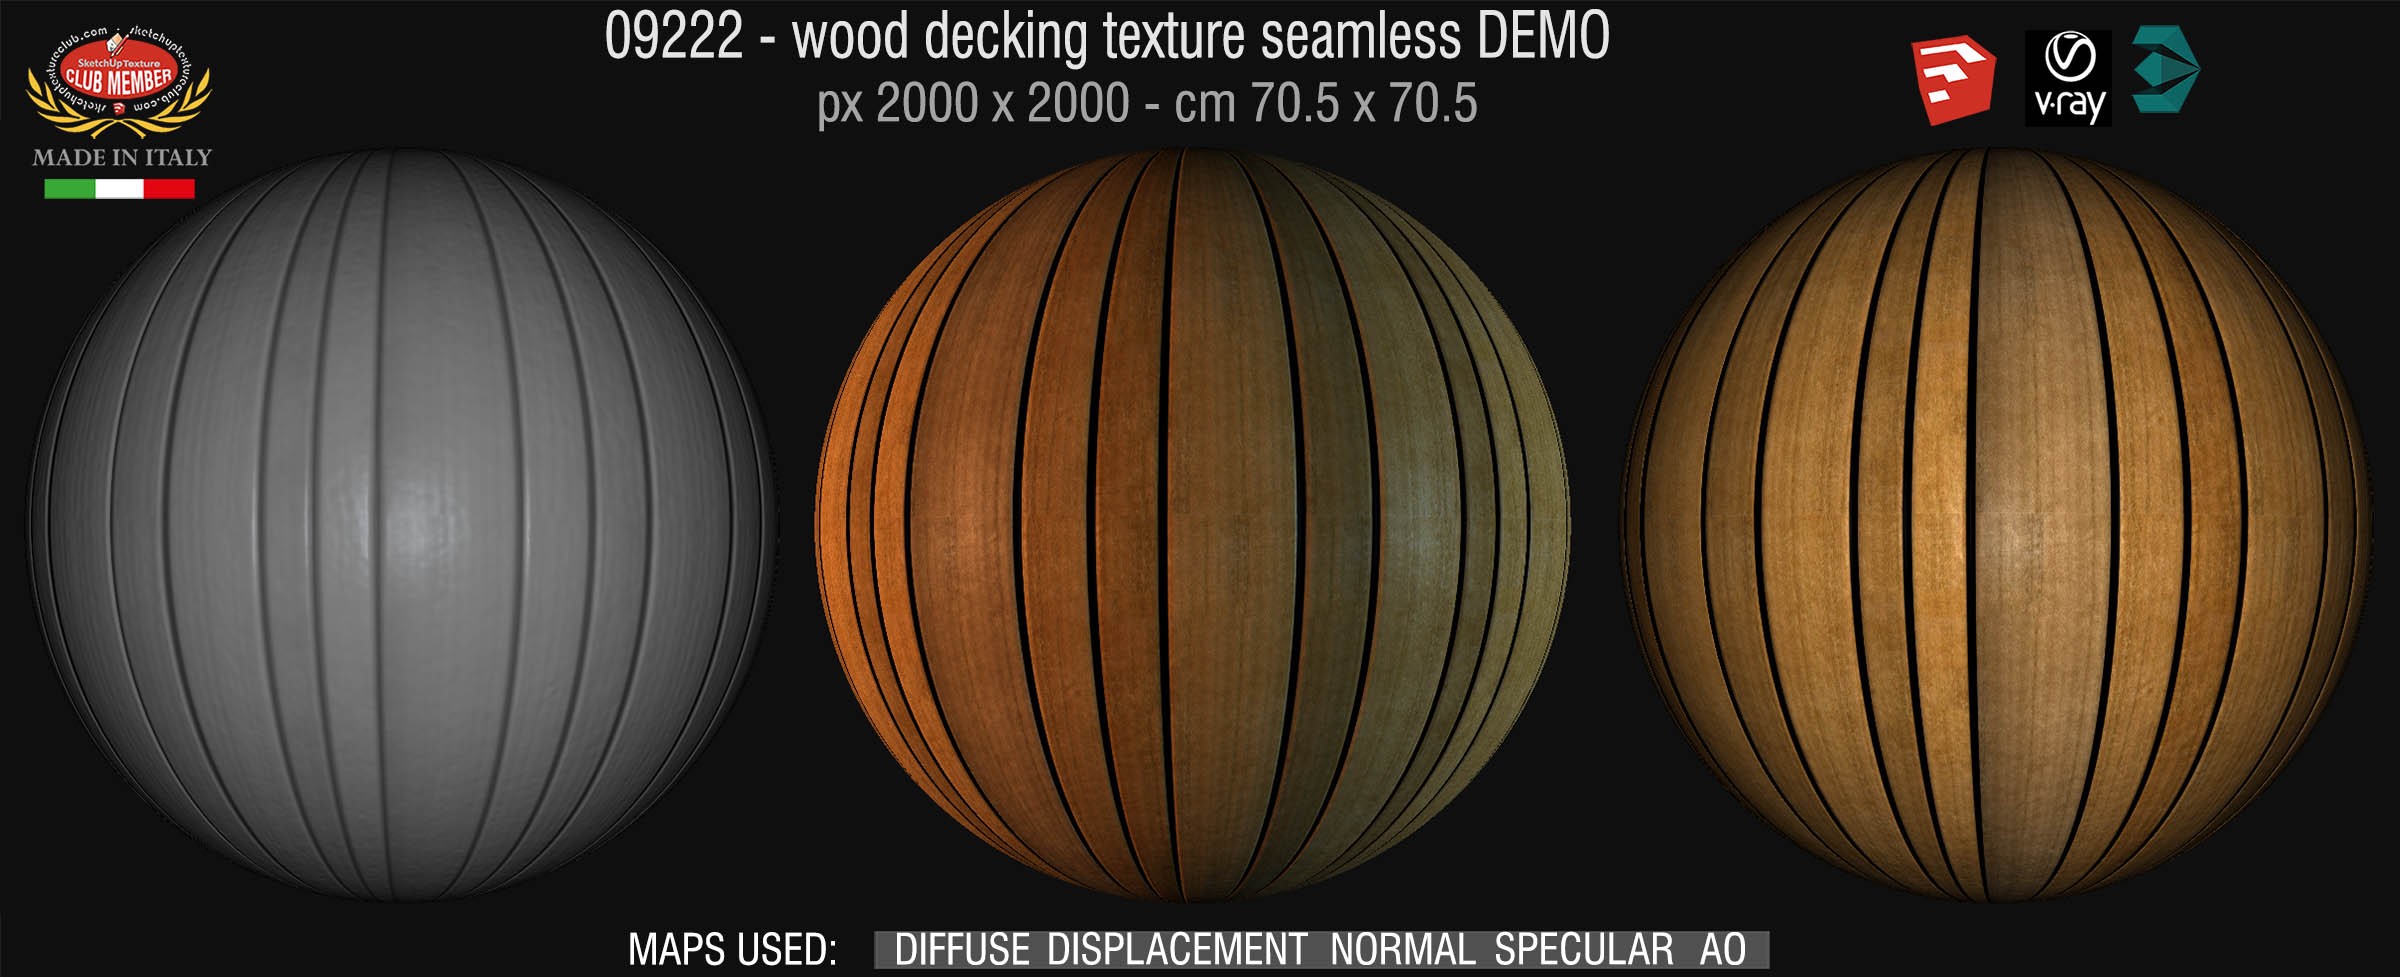 09222 HR Wood decking texture seamless + maps DEMO